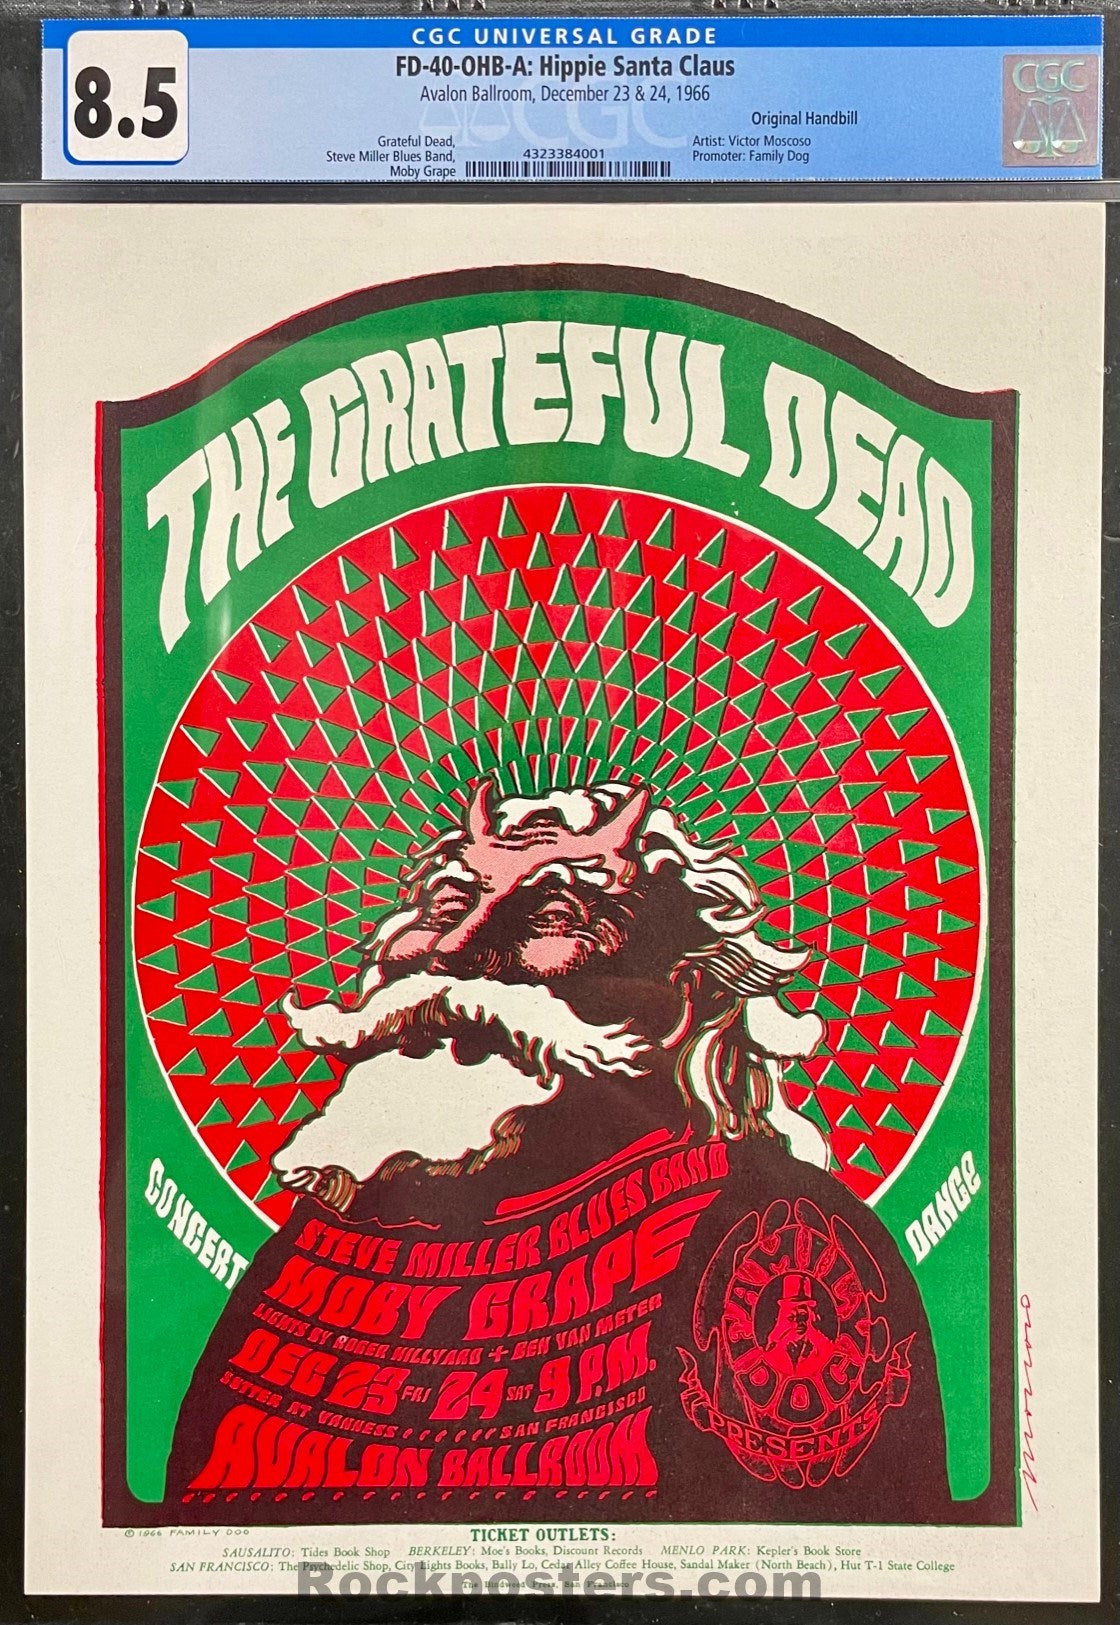 AUCTION - FD-40 - The Grateful Dead - Victor Moscoso - 1966 Handbill - Avalon Ballroom - CGC Graded 8.5